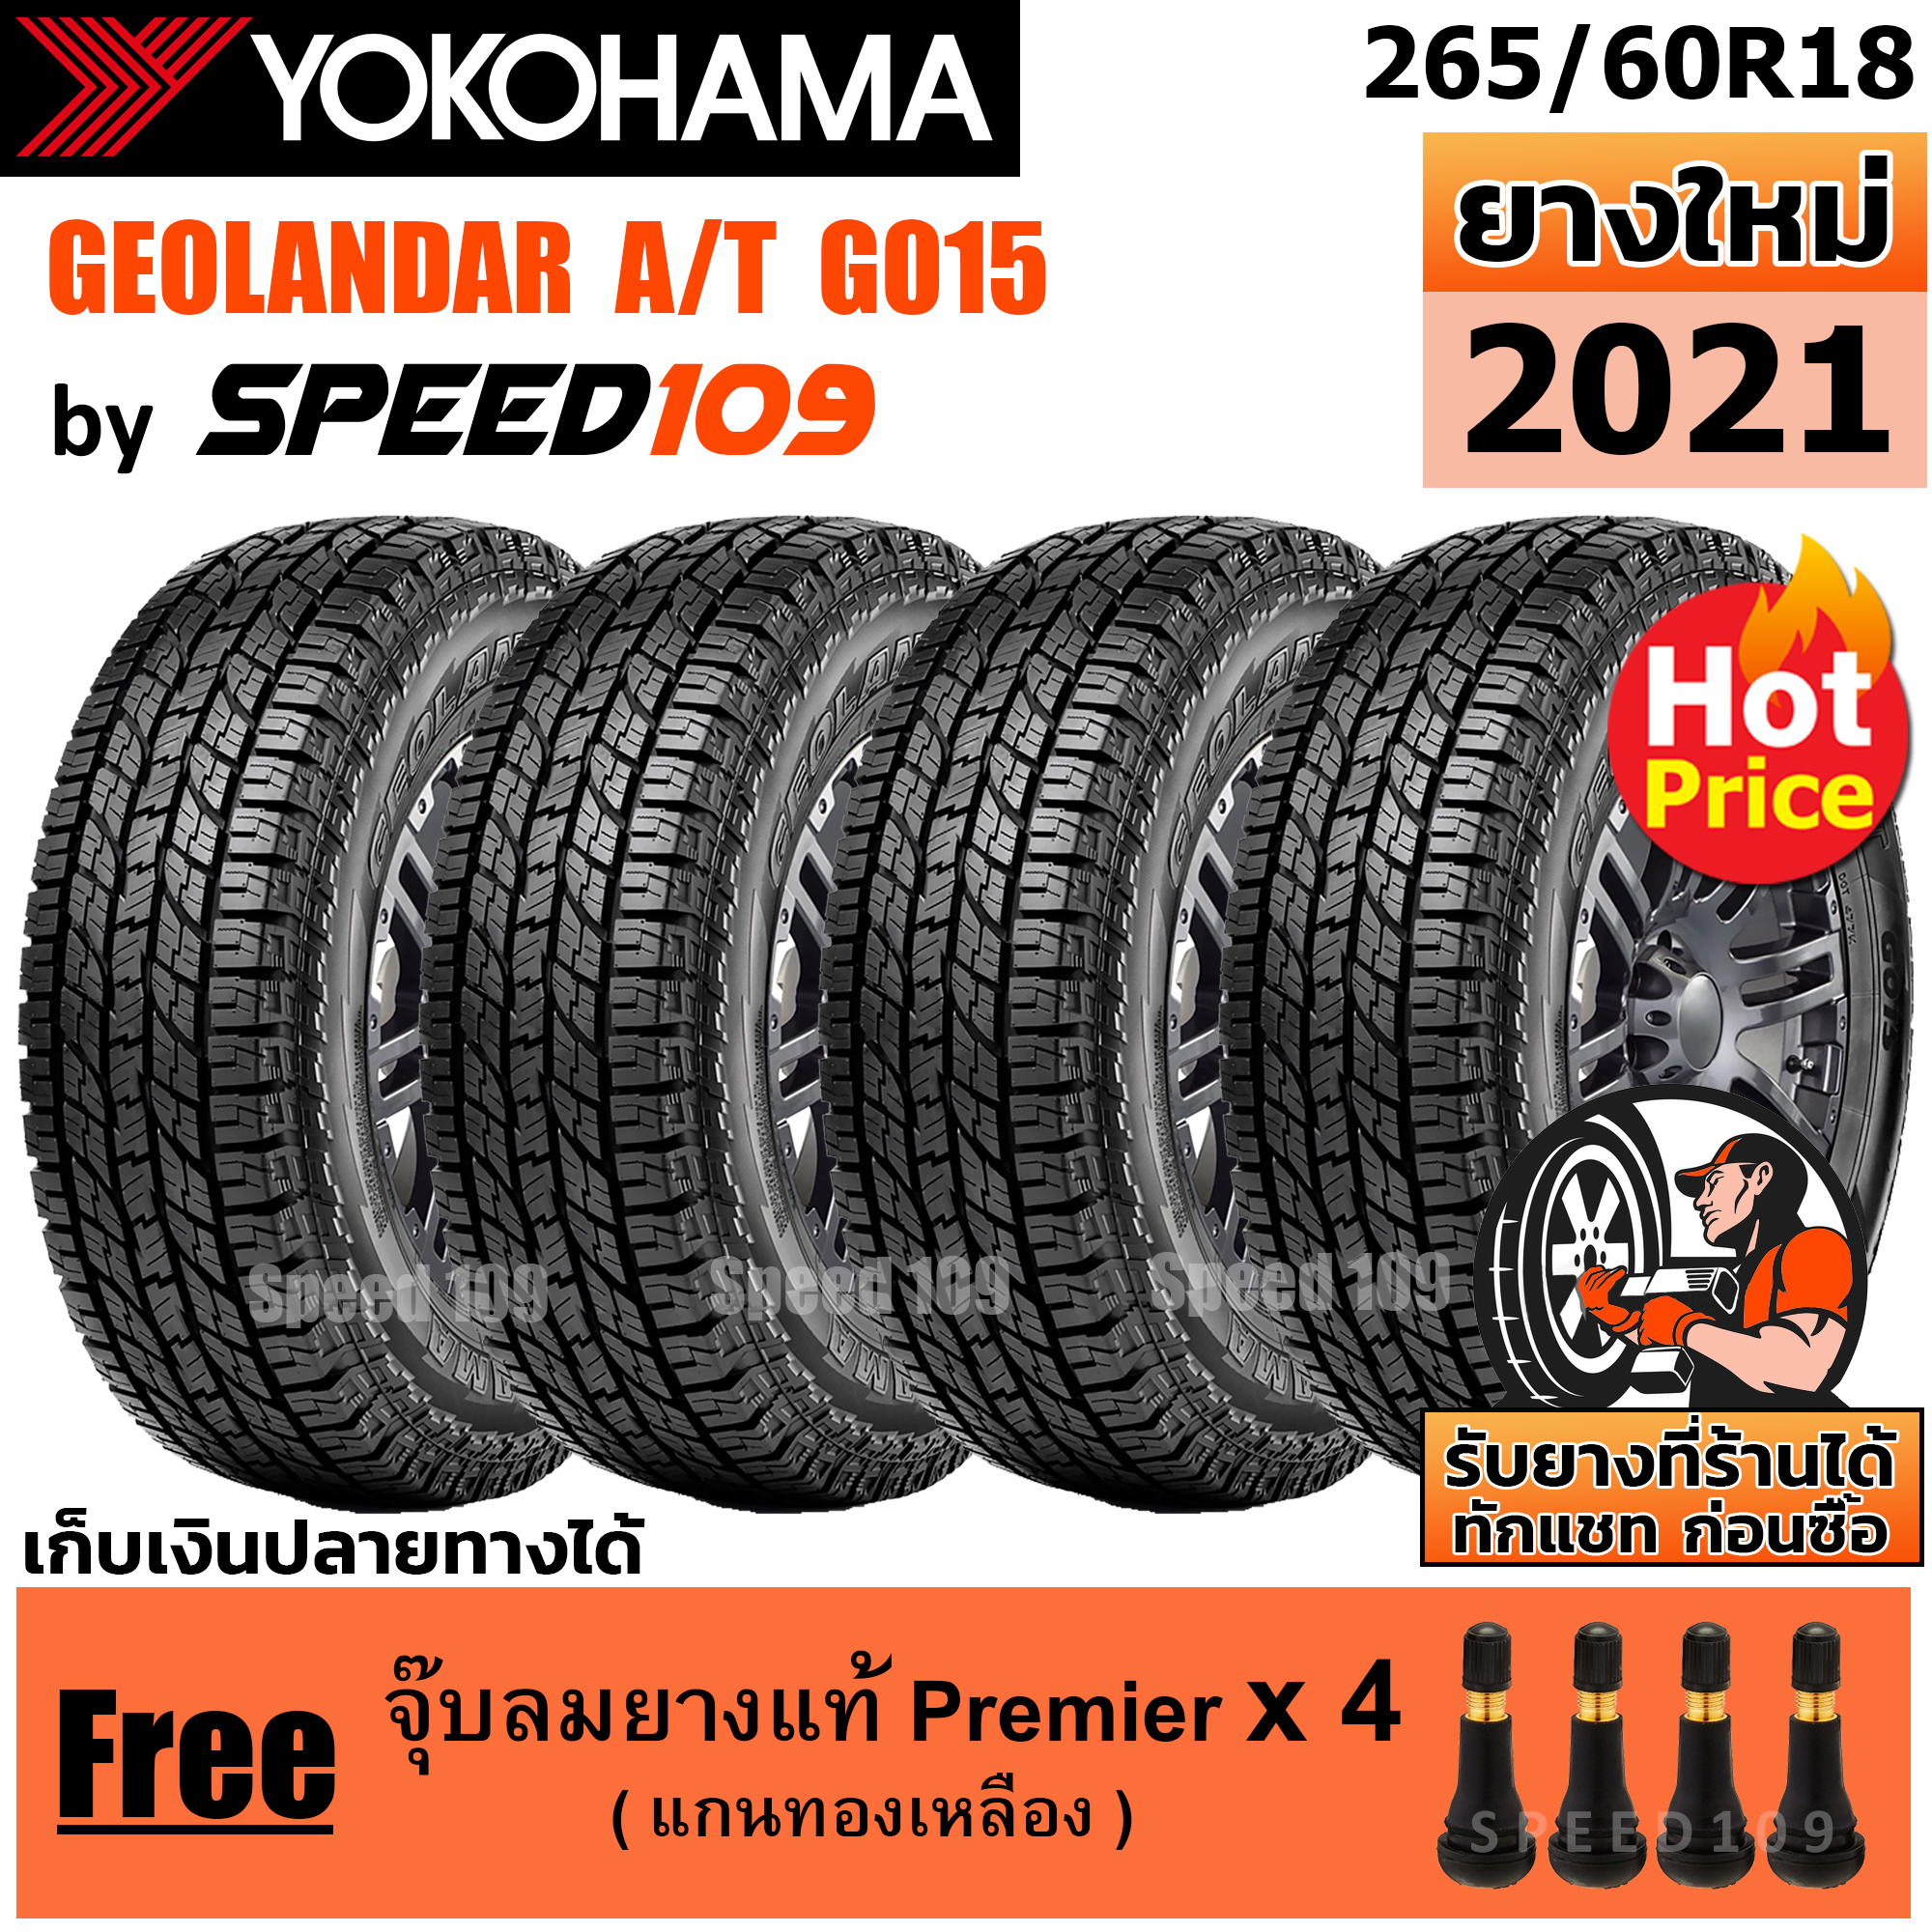 YOKOHAMA ยางรถยนต์ ขอบ 18 ขนาด 265/60R18 รุ่น GEOLANDAR A/T G015 - 4 เส้น (ปี 2021)